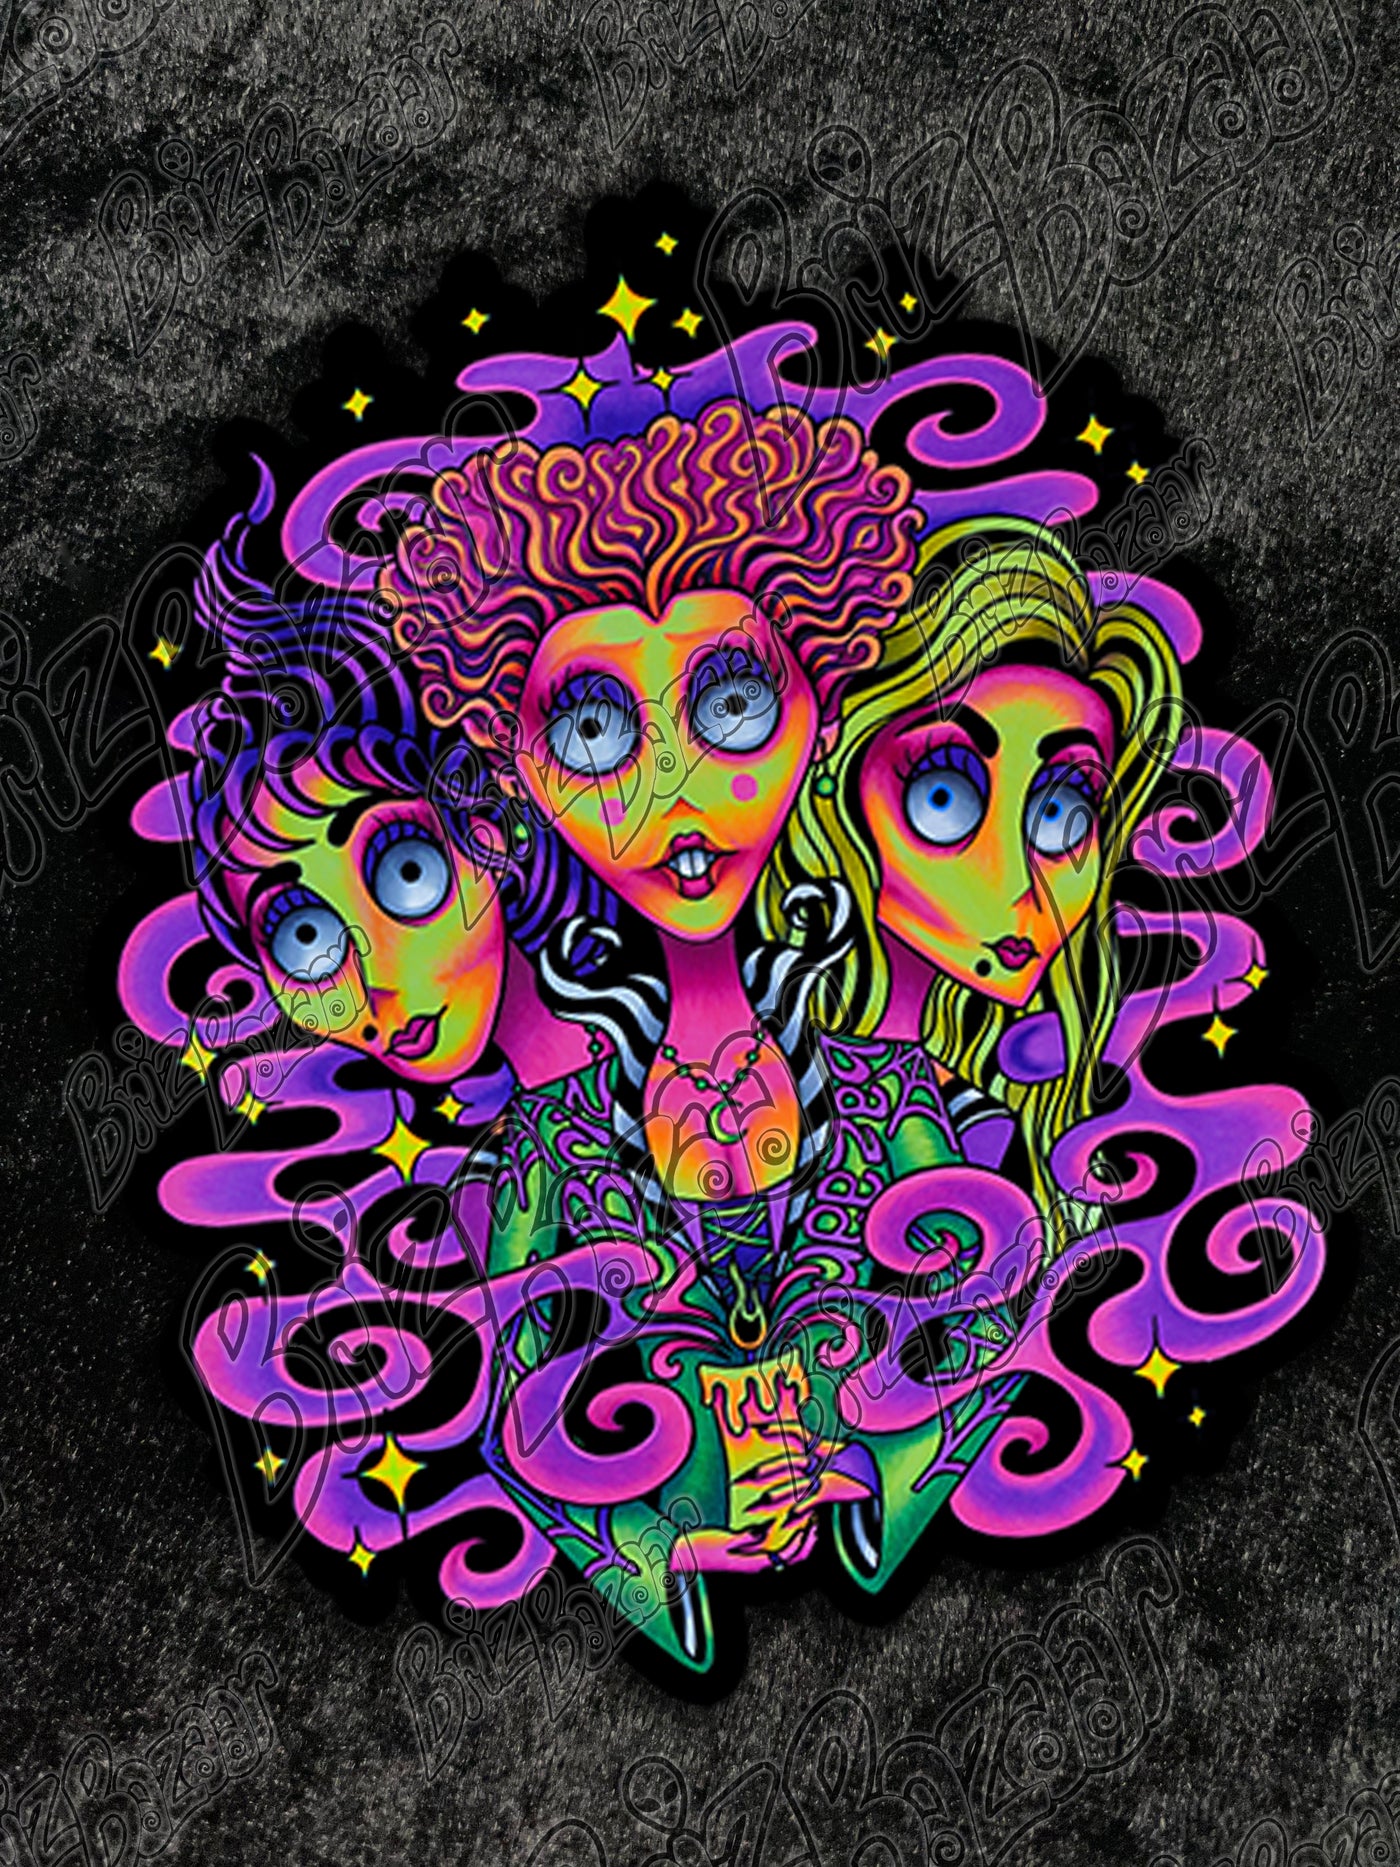 Vinyl Sticker of Wicked Witchez